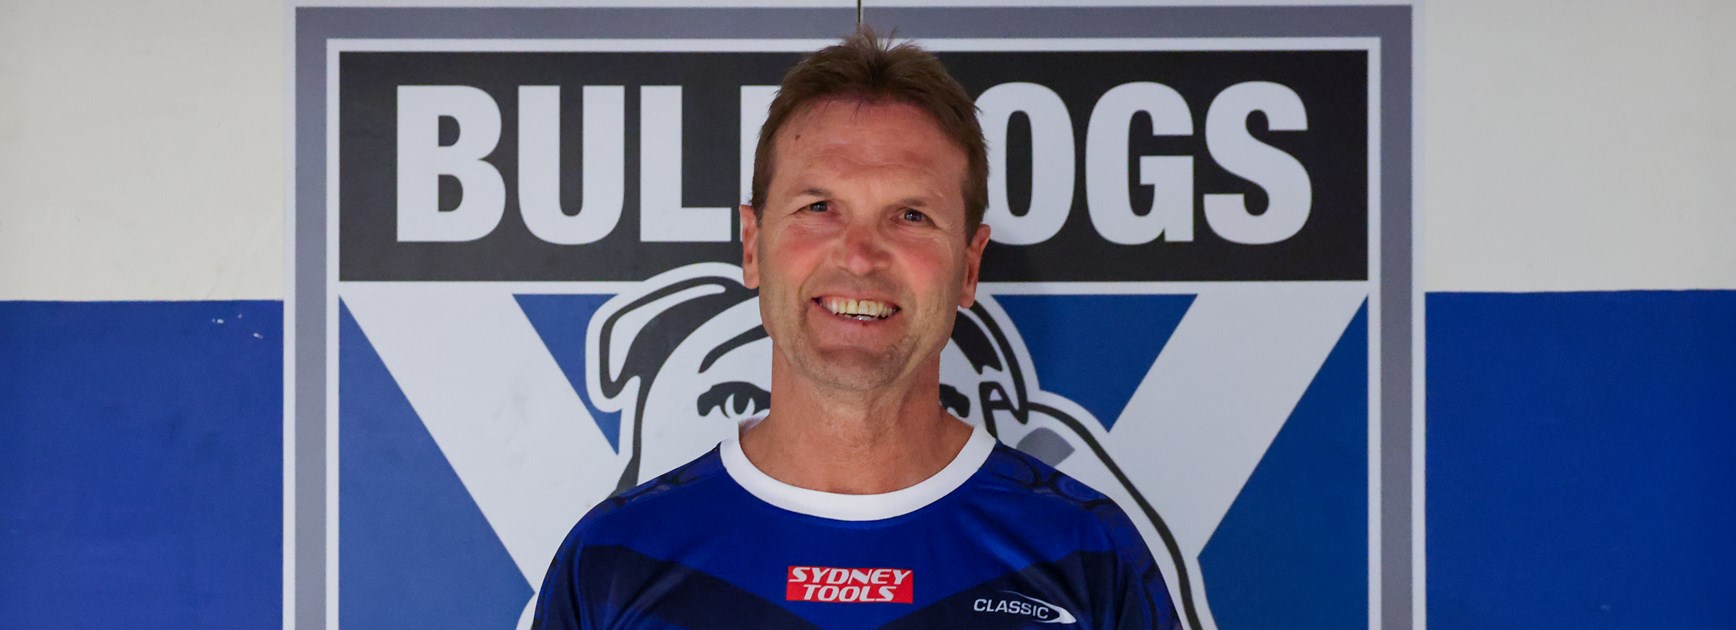 Michael Potter announced as interim Head Coach of the Bulldogs